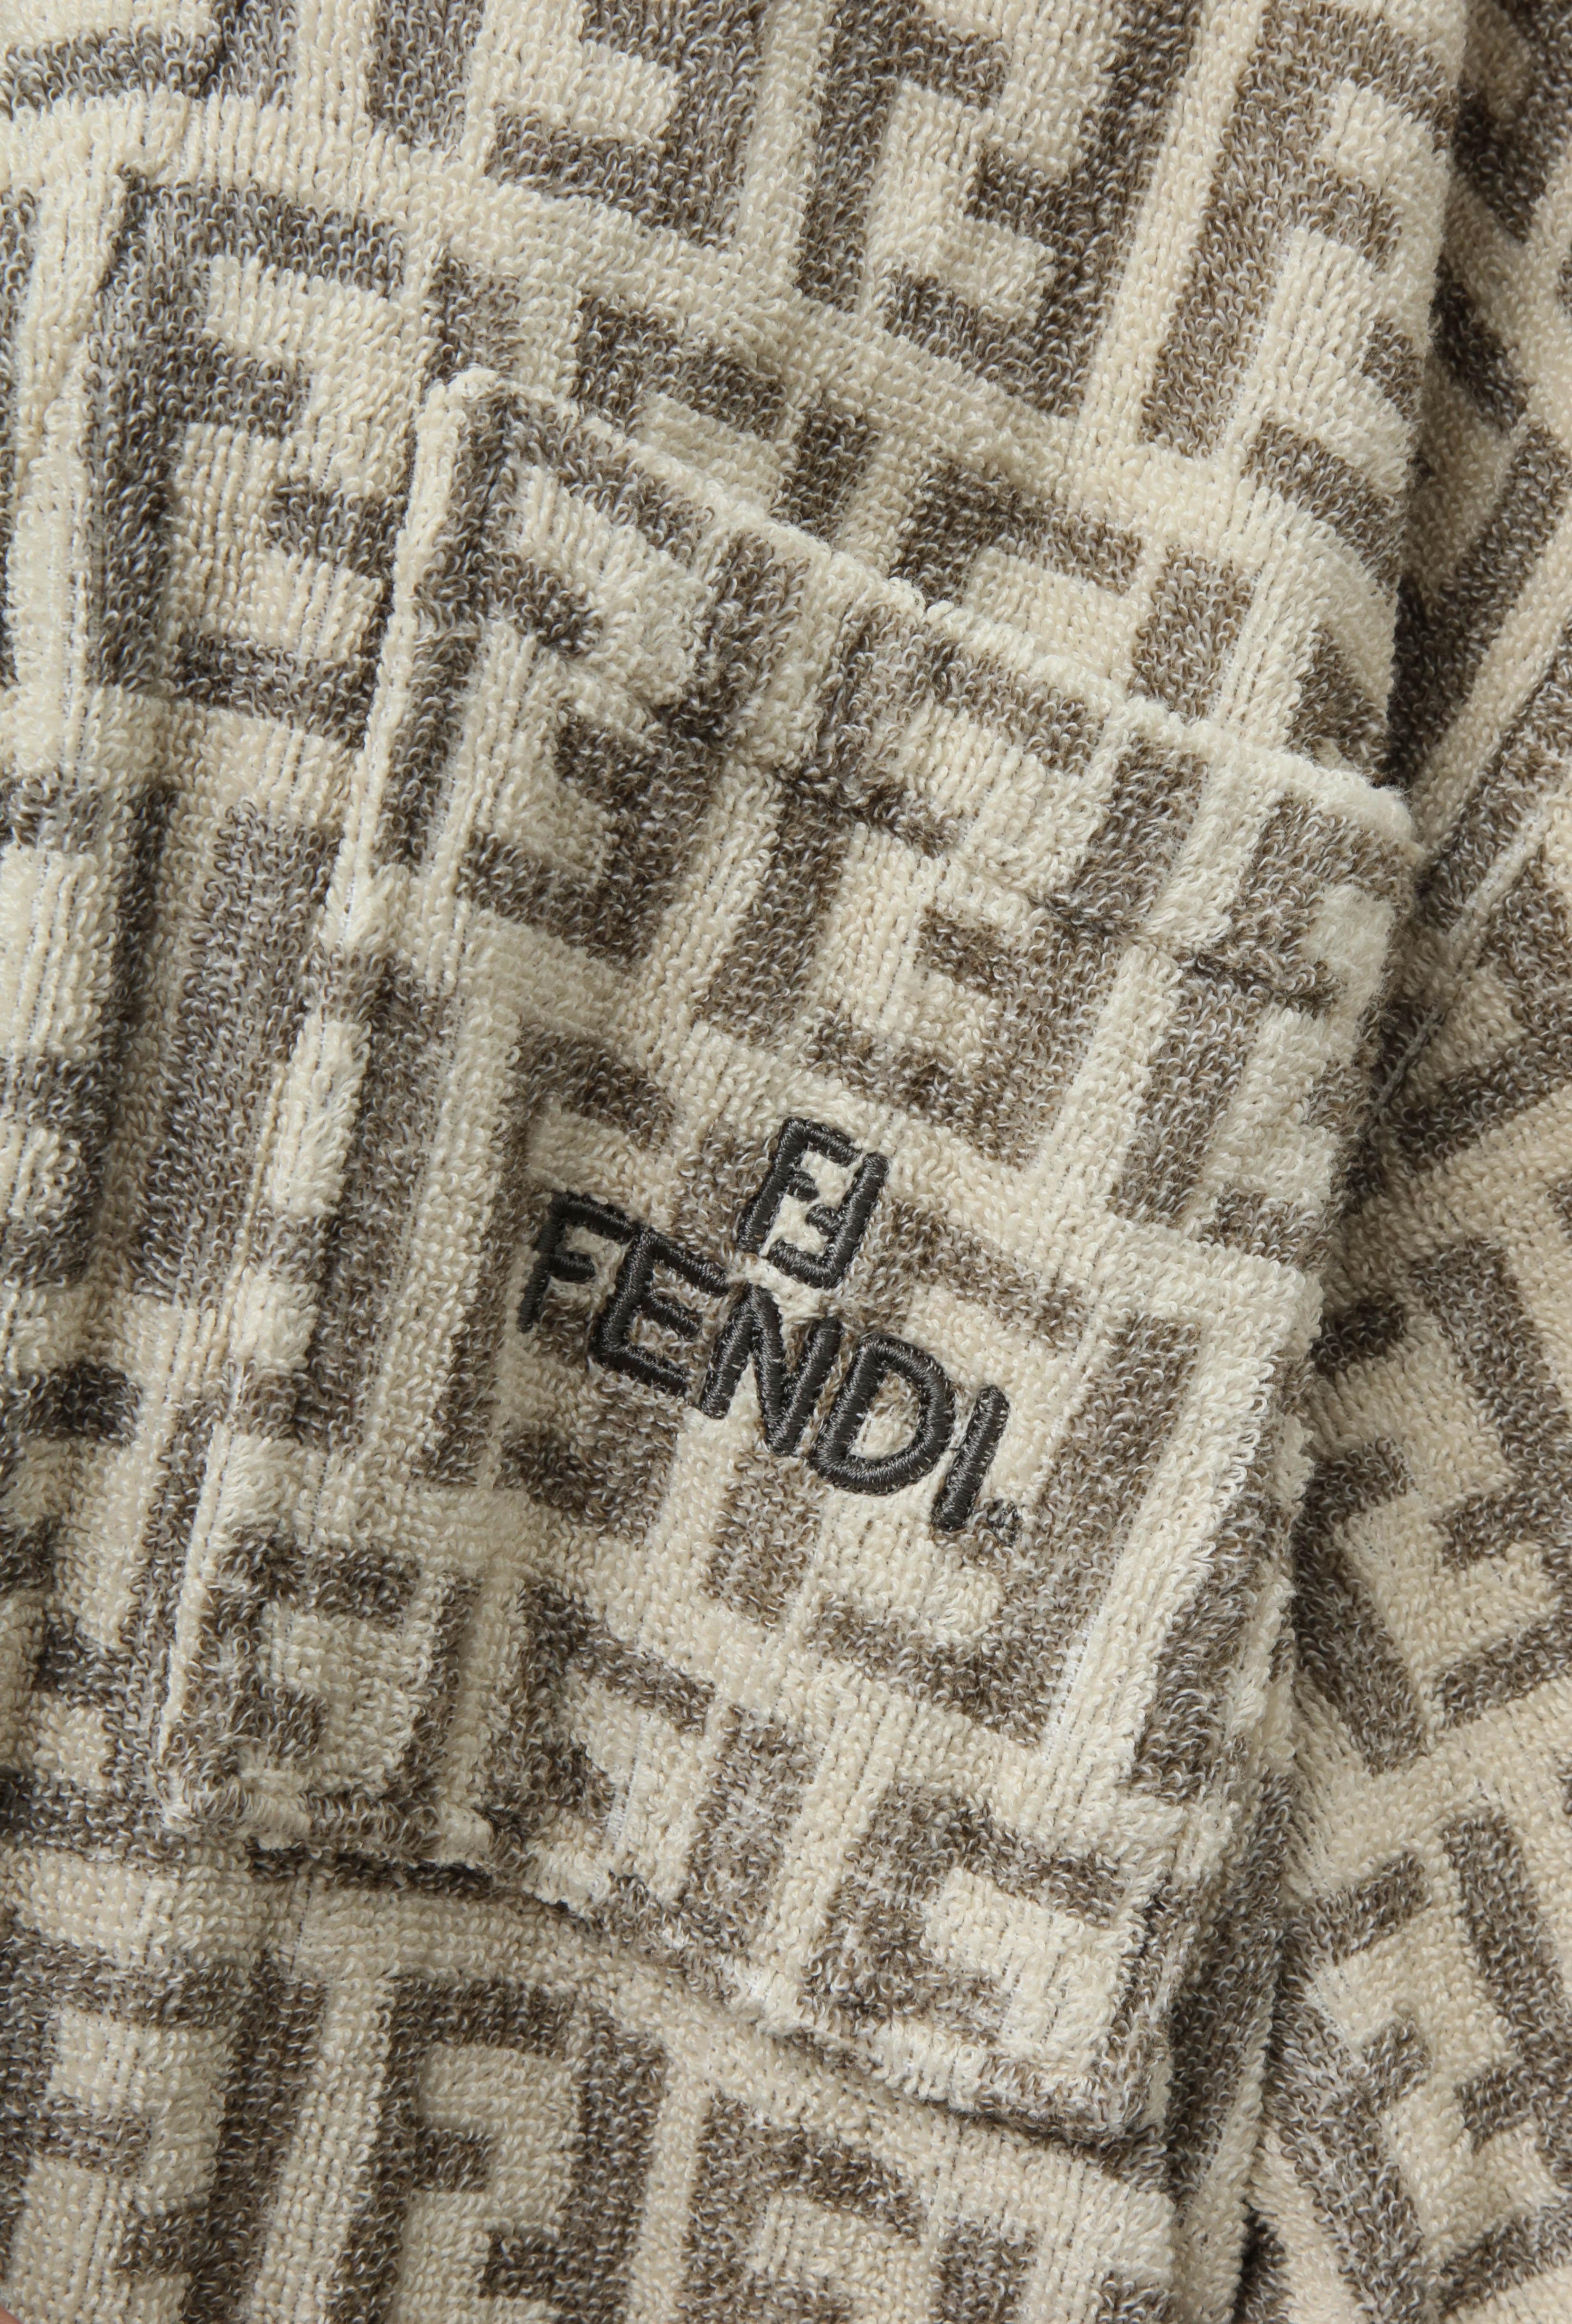 Very Rare Fendi bathrobe with Iconic FF Logos. 